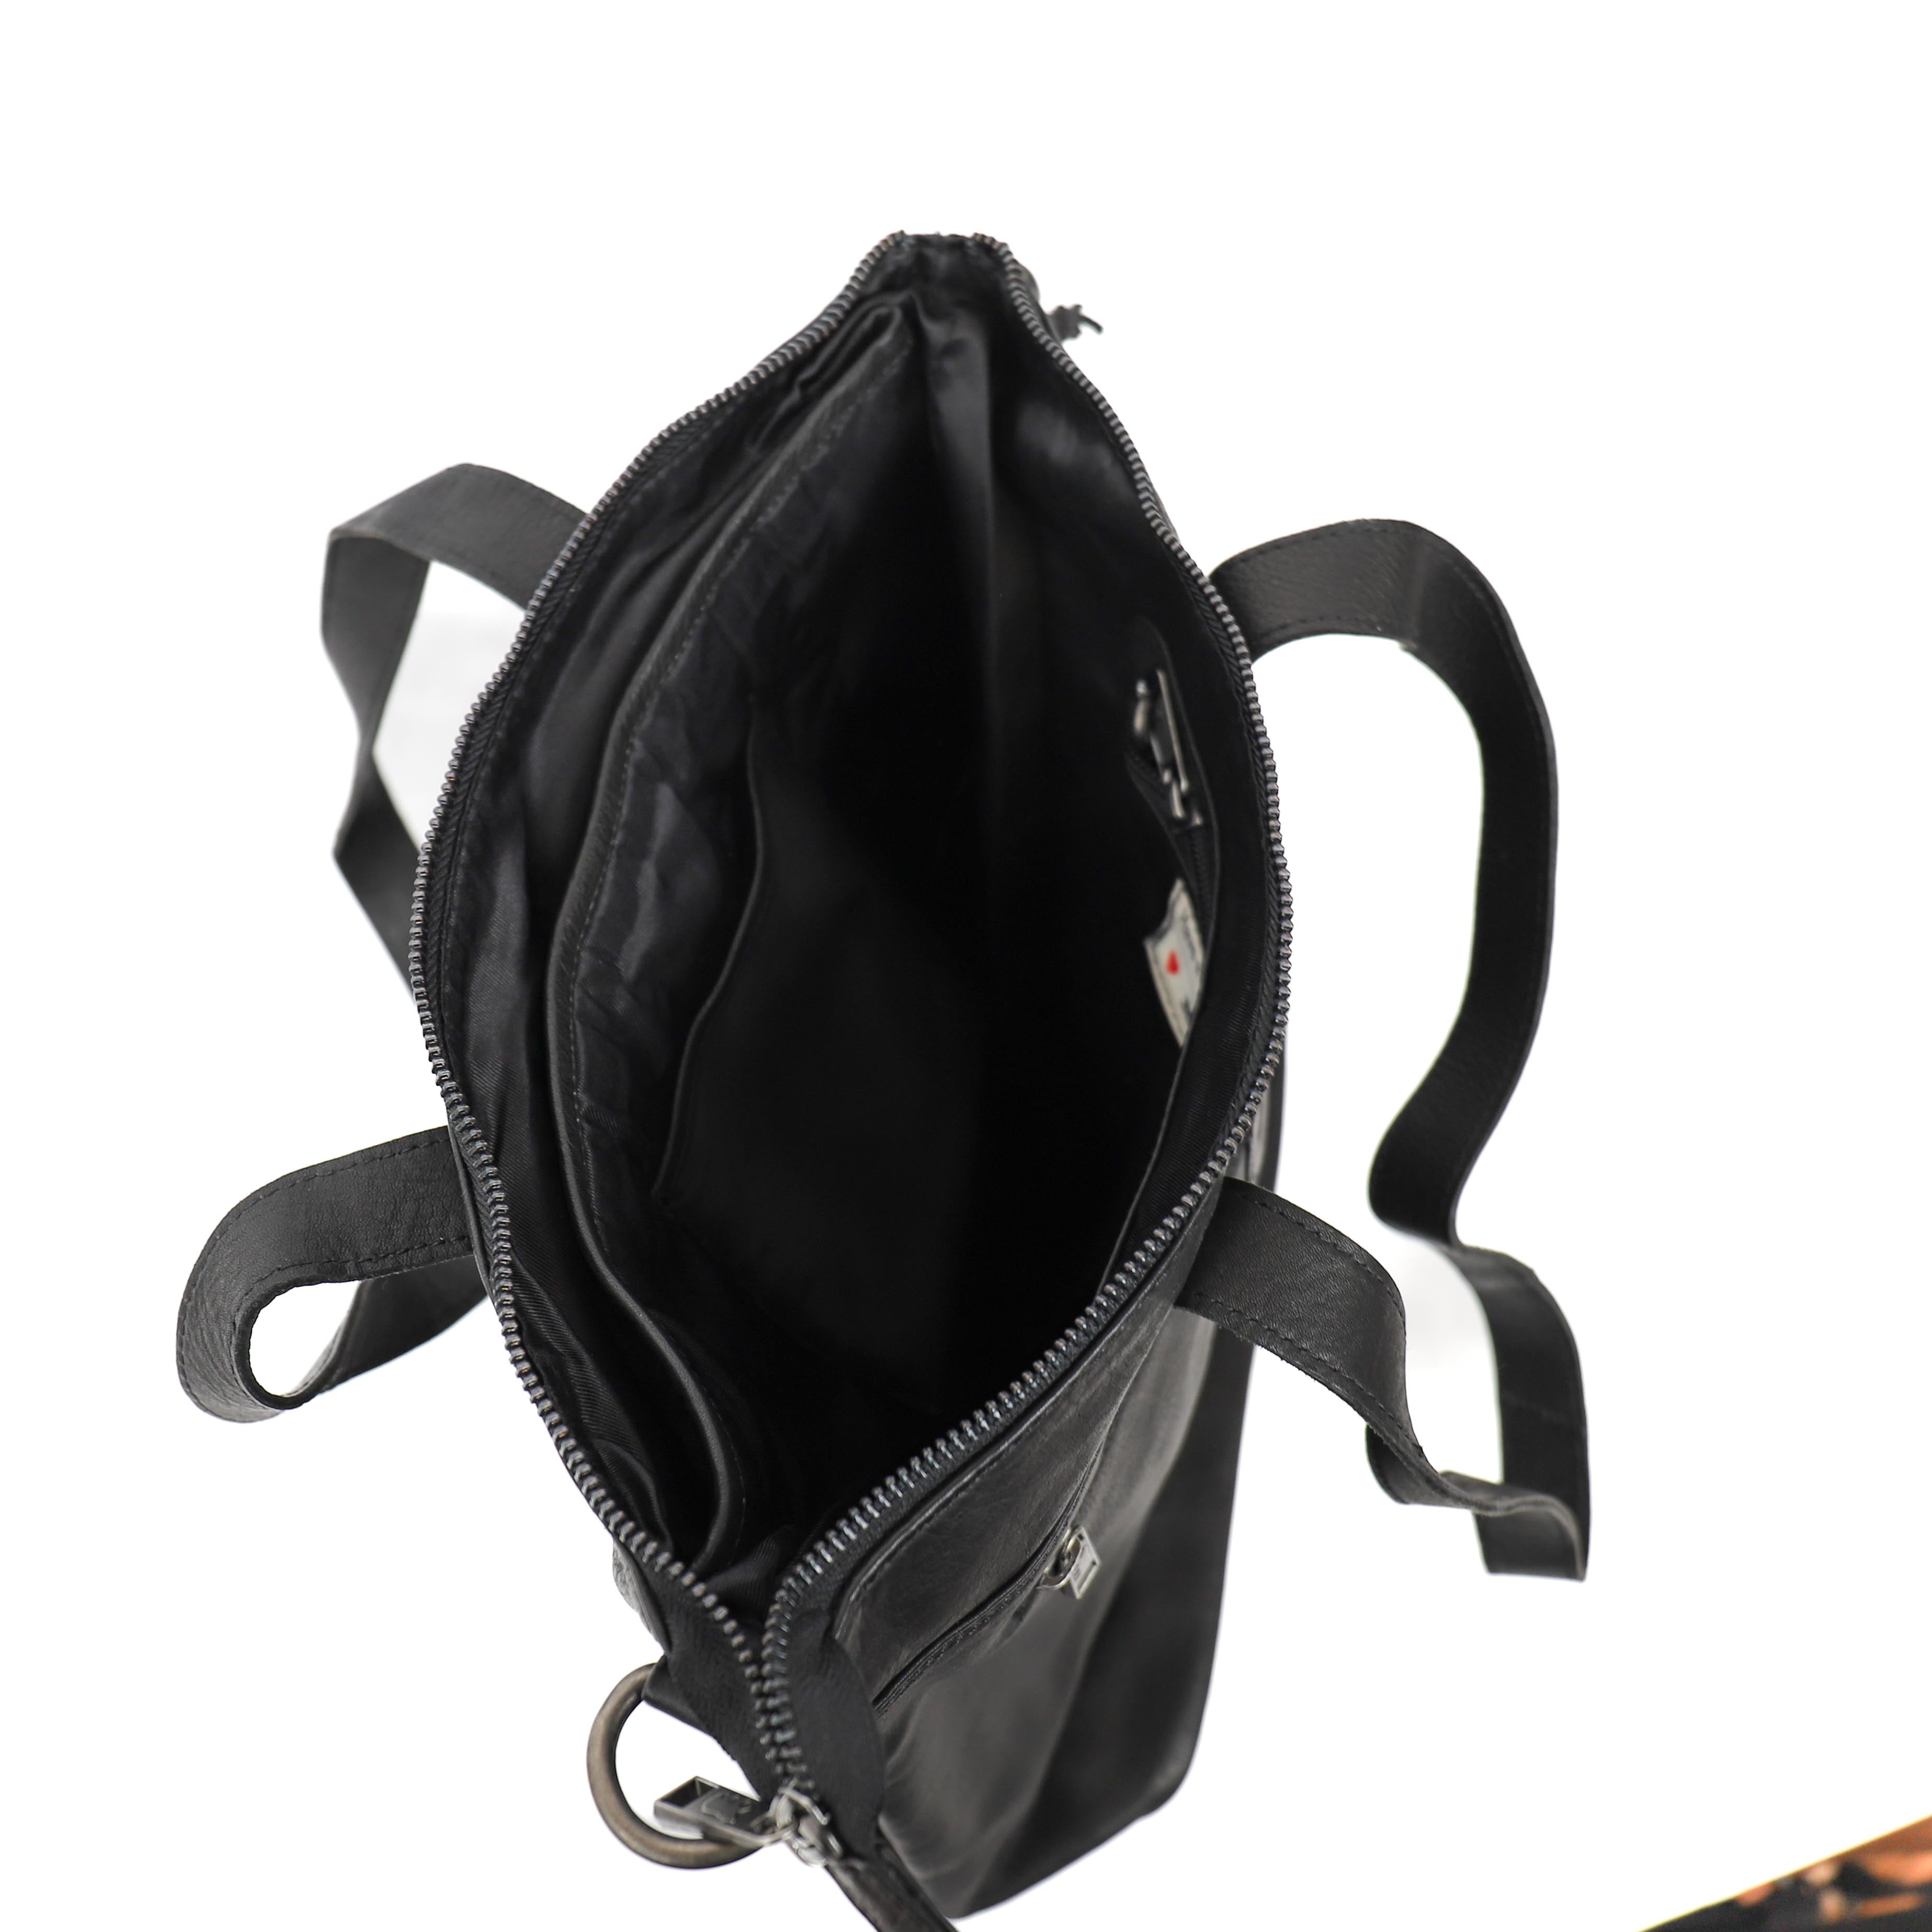 Hand/shoulder bag 'Loesie' black